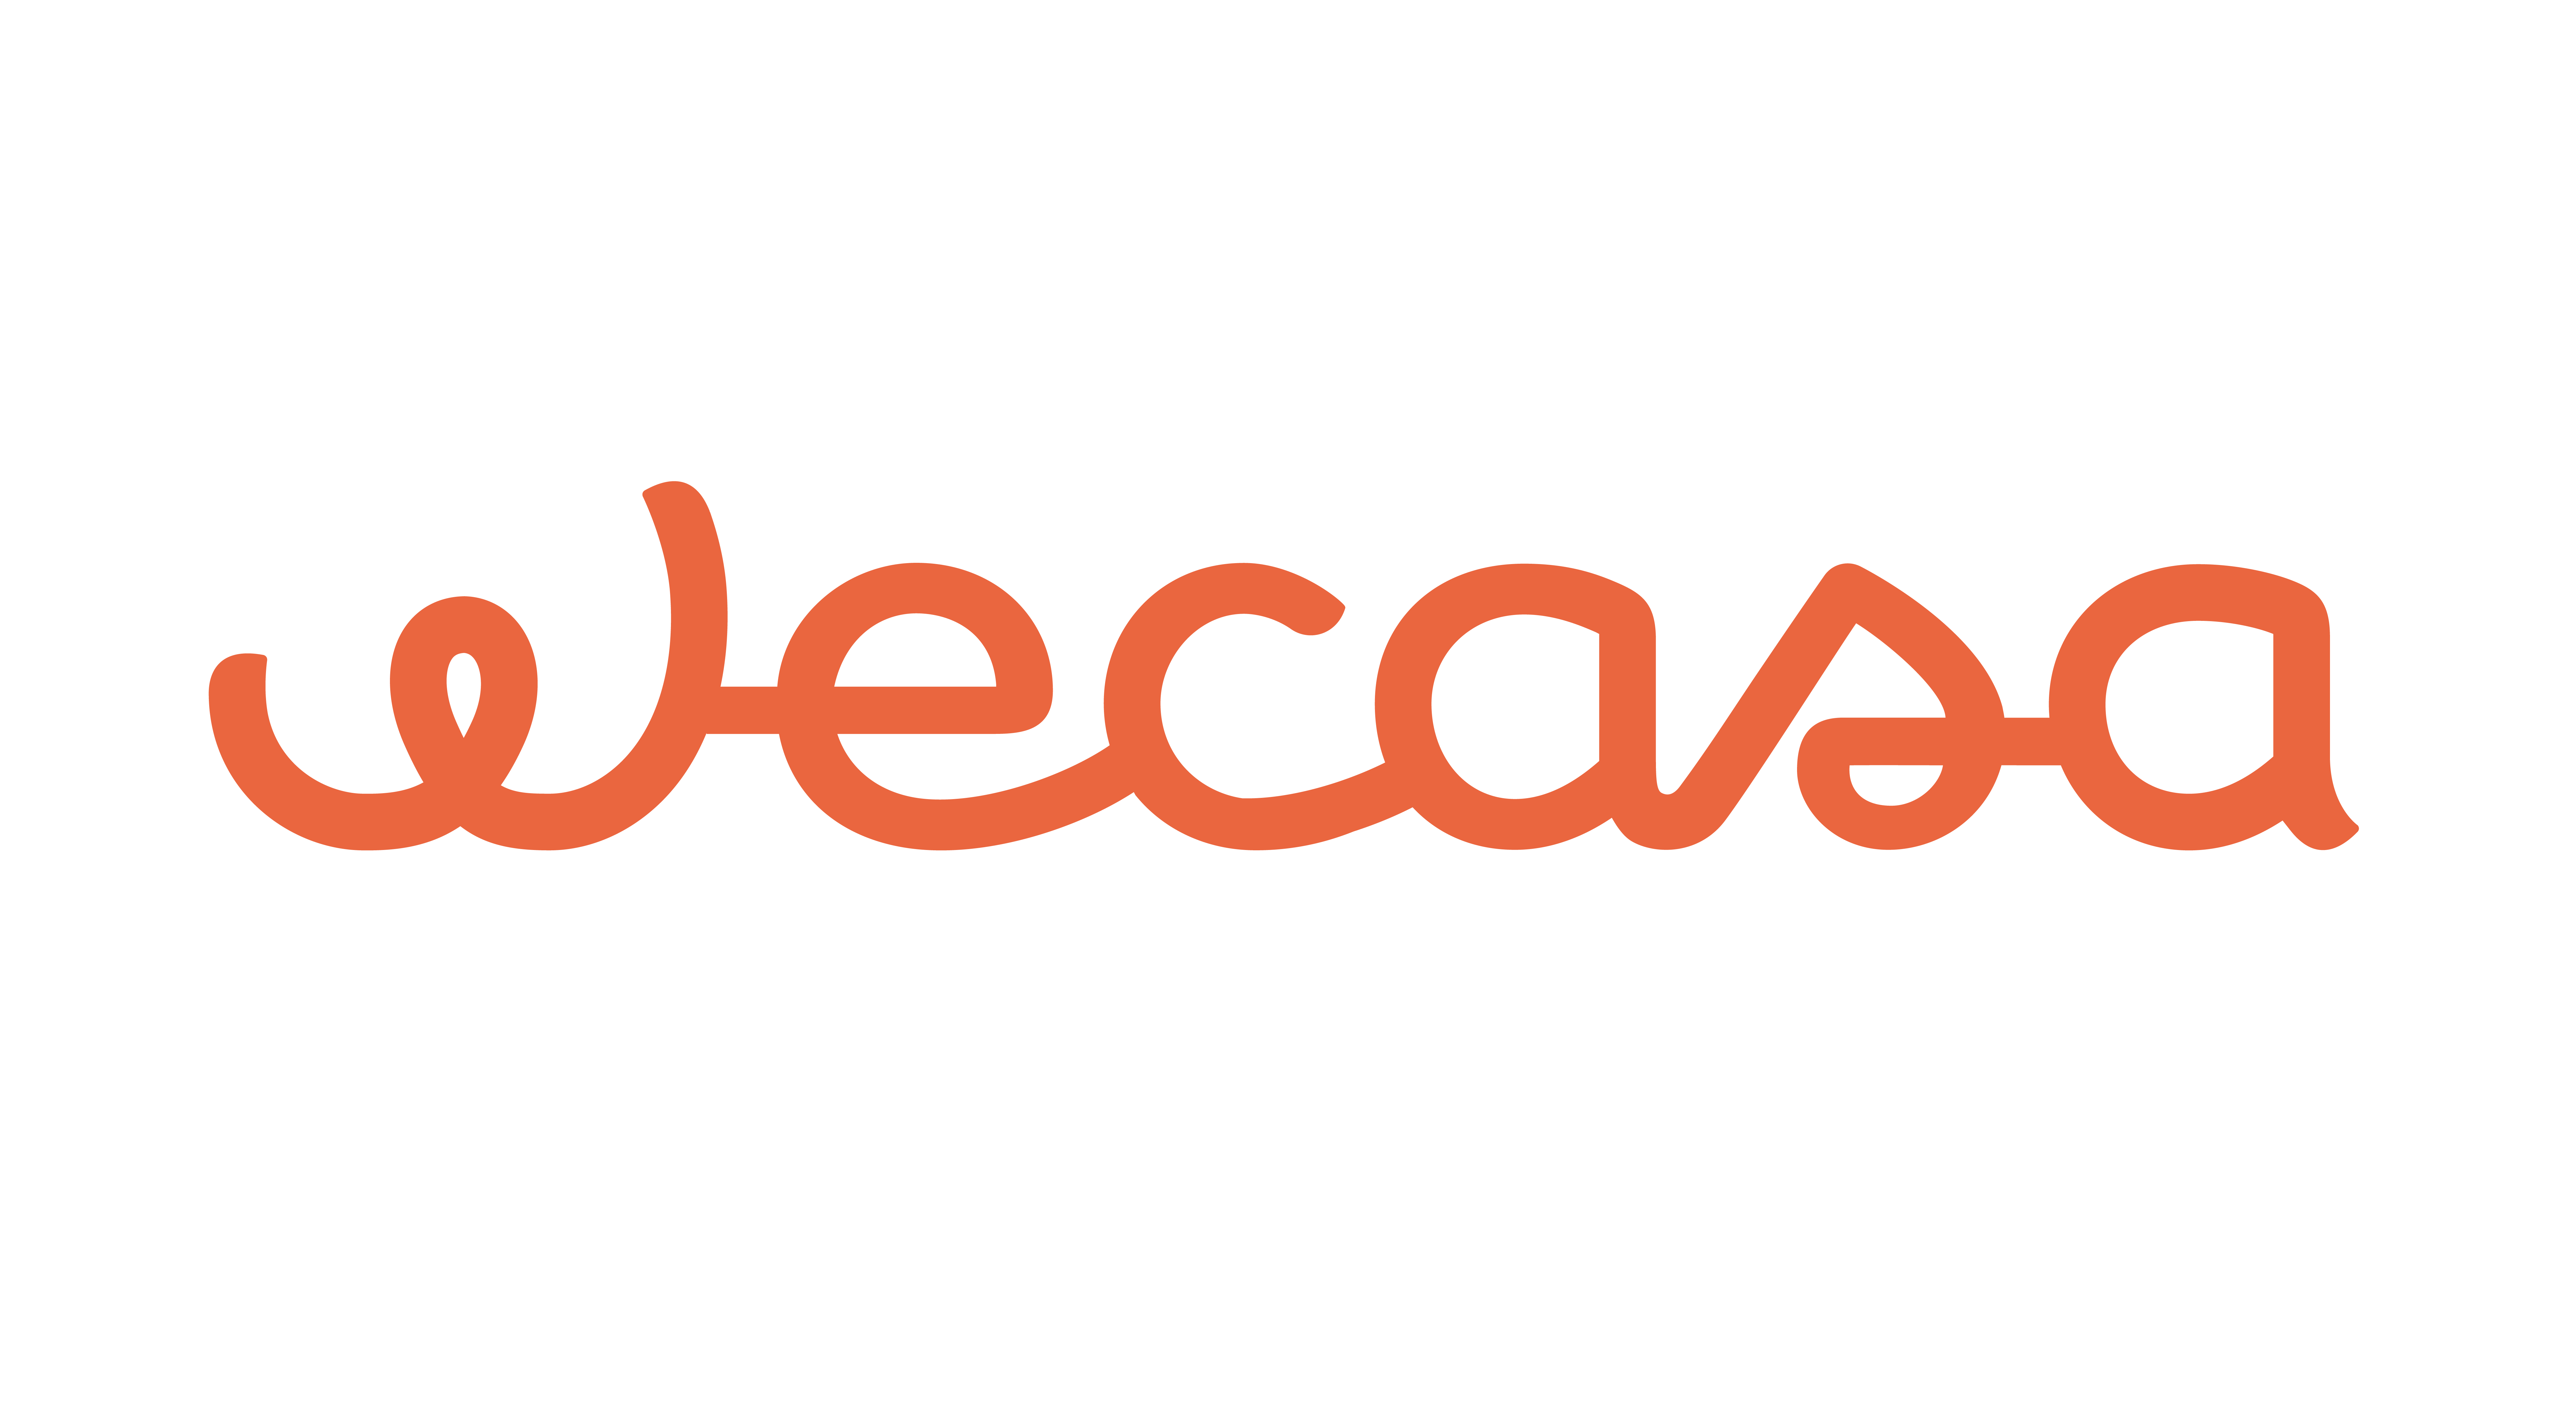 Wecasa’s logo